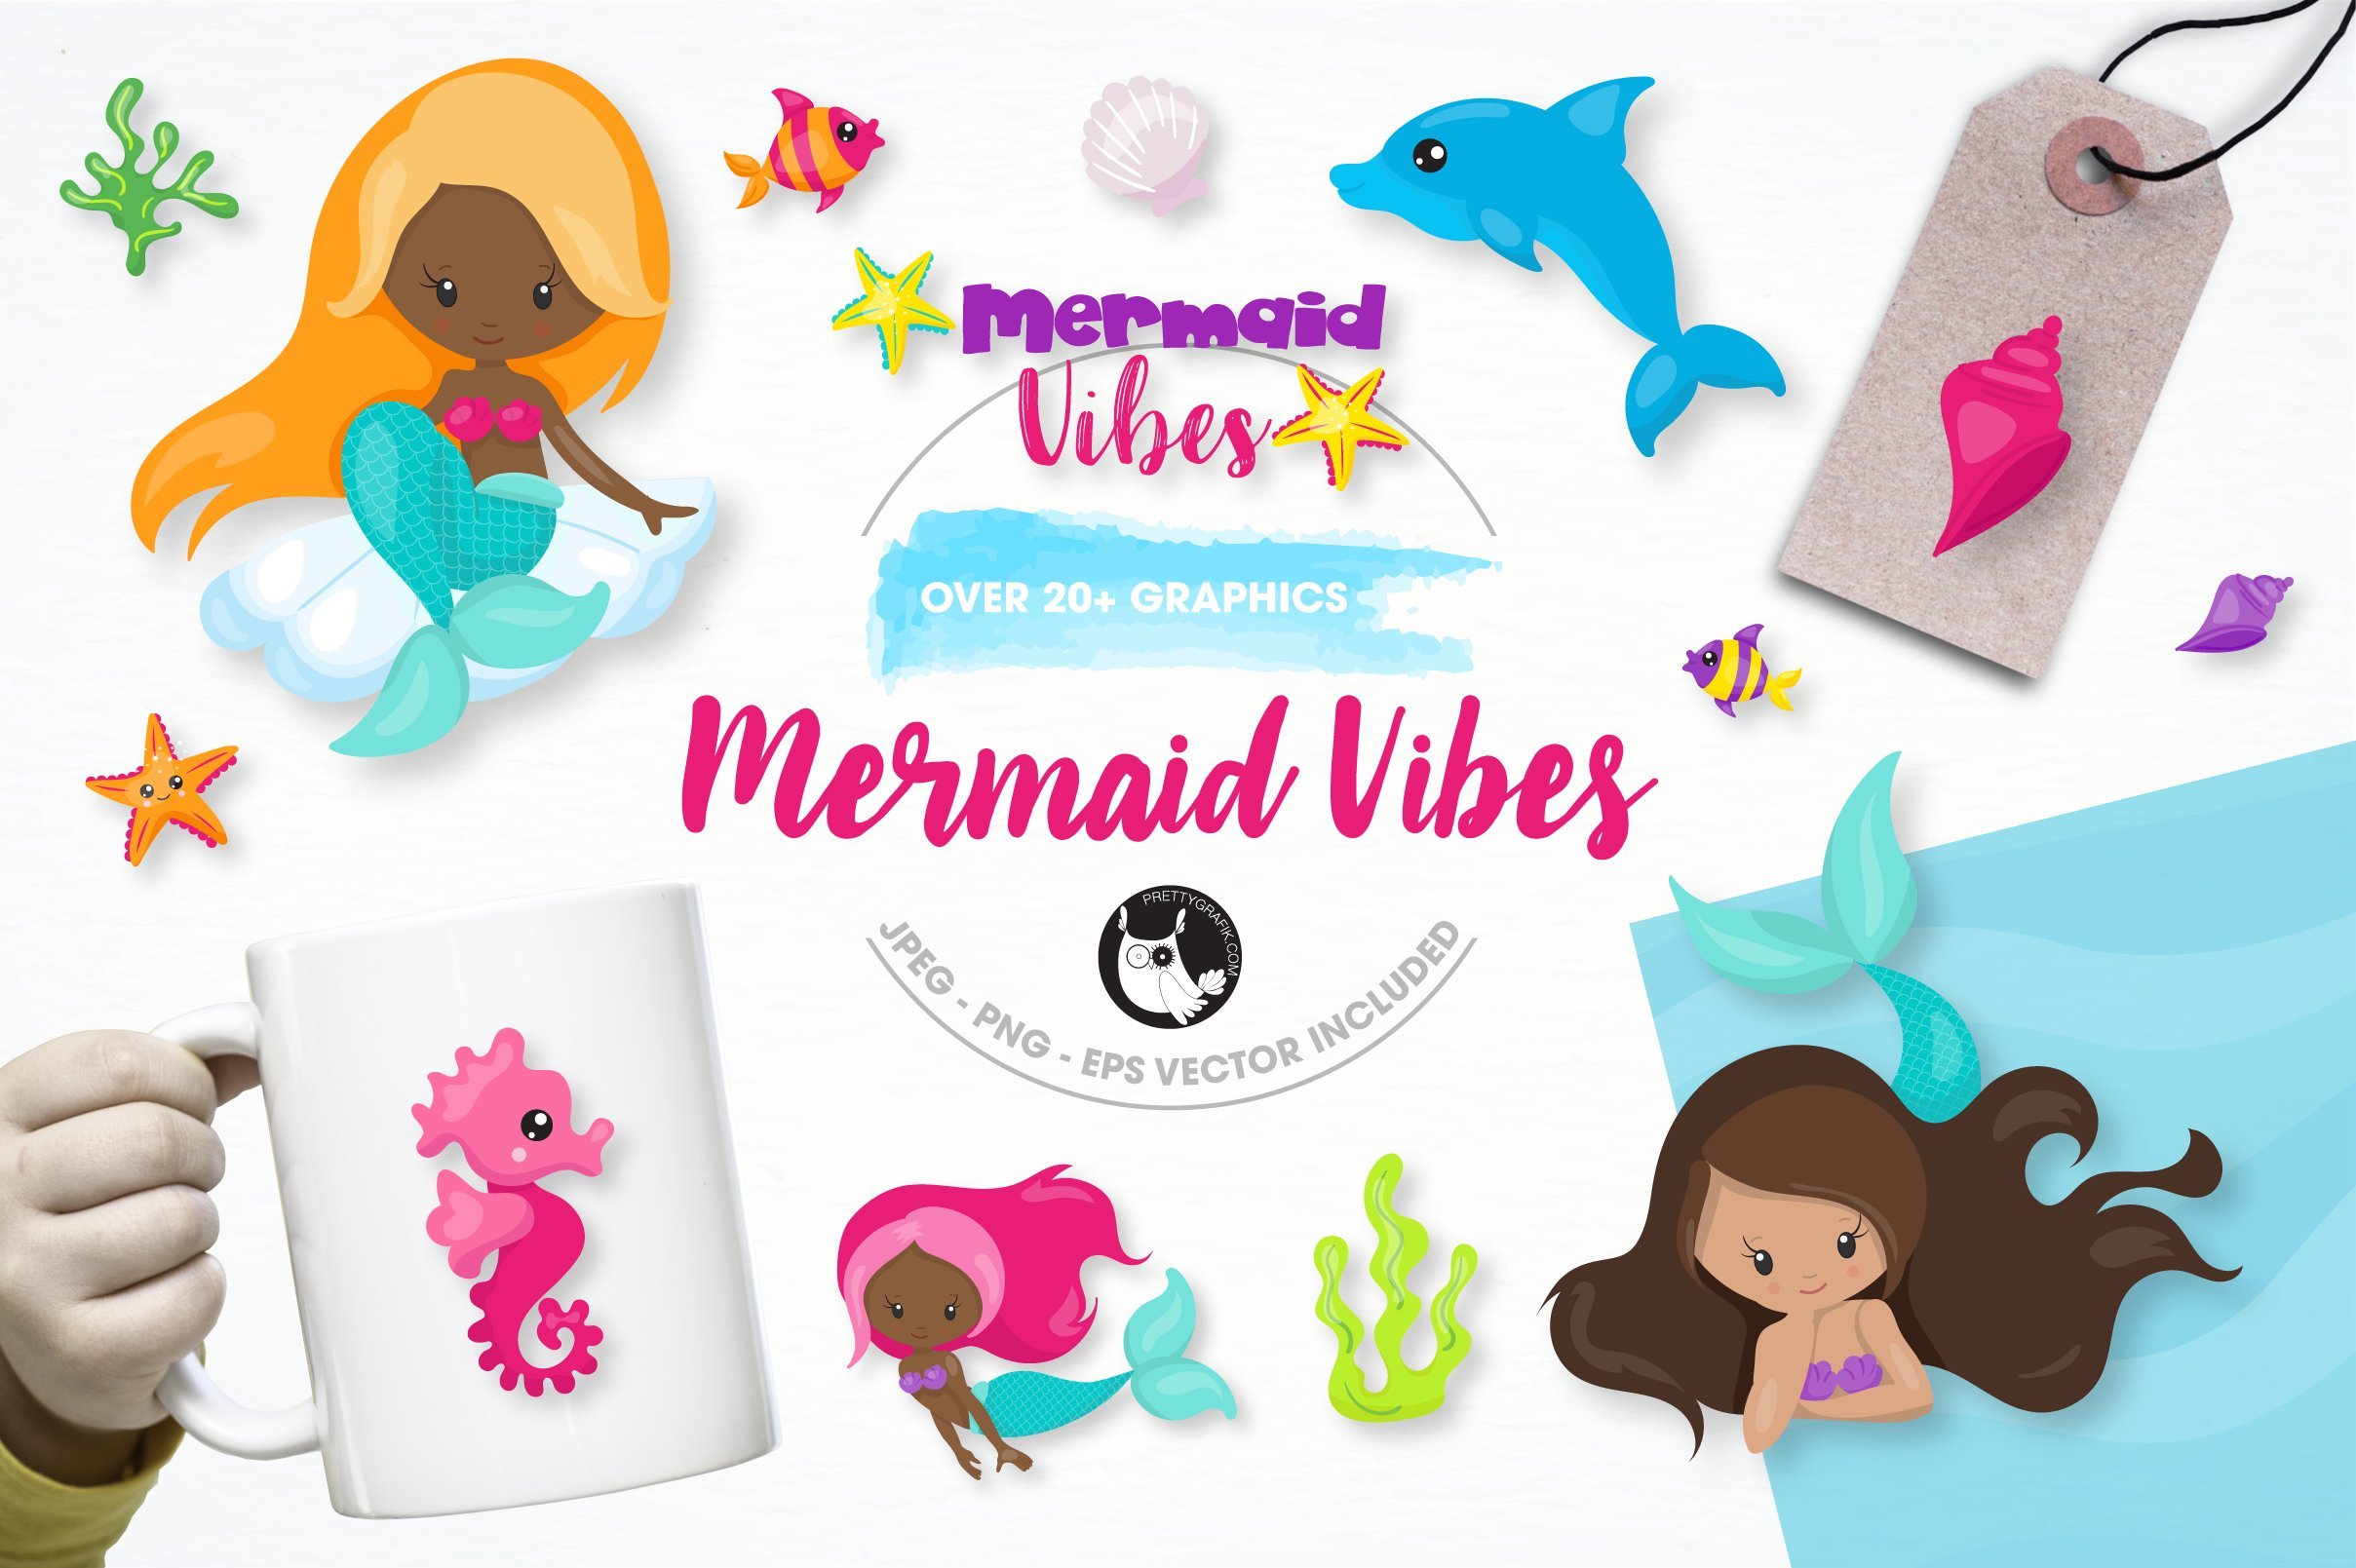 Mermaid vibes illustration pack - Vector Image